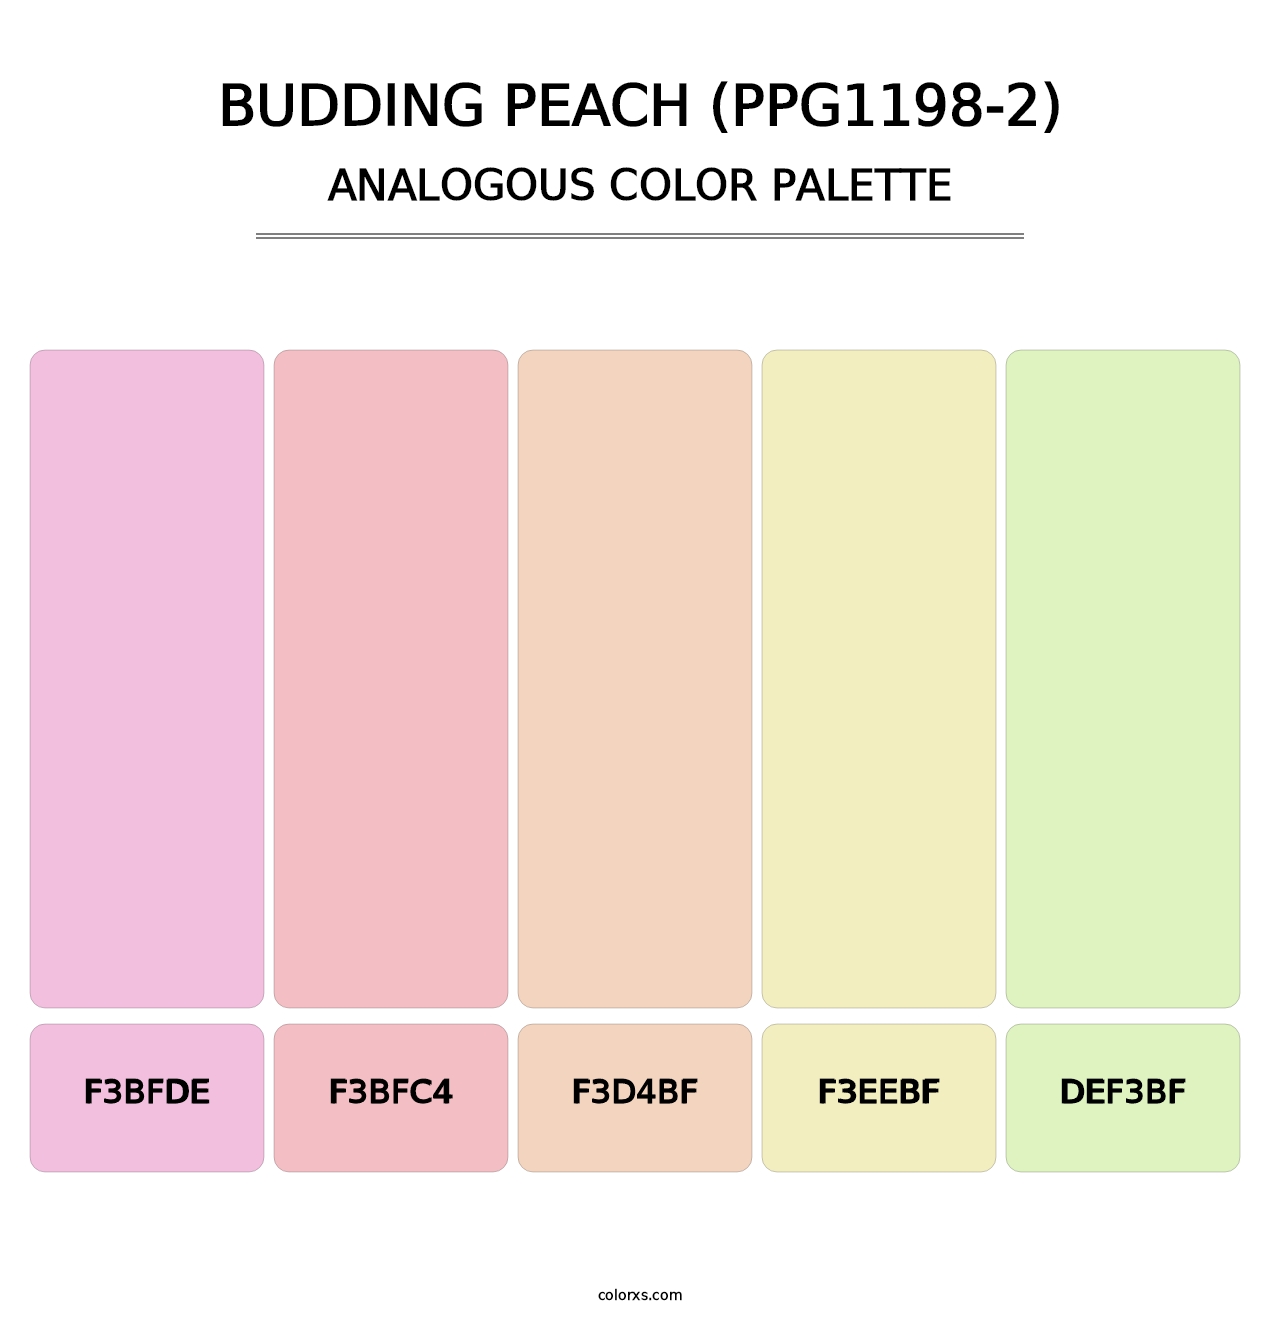 Budding Peach (PPG1198-2) - Analogous Color Palette